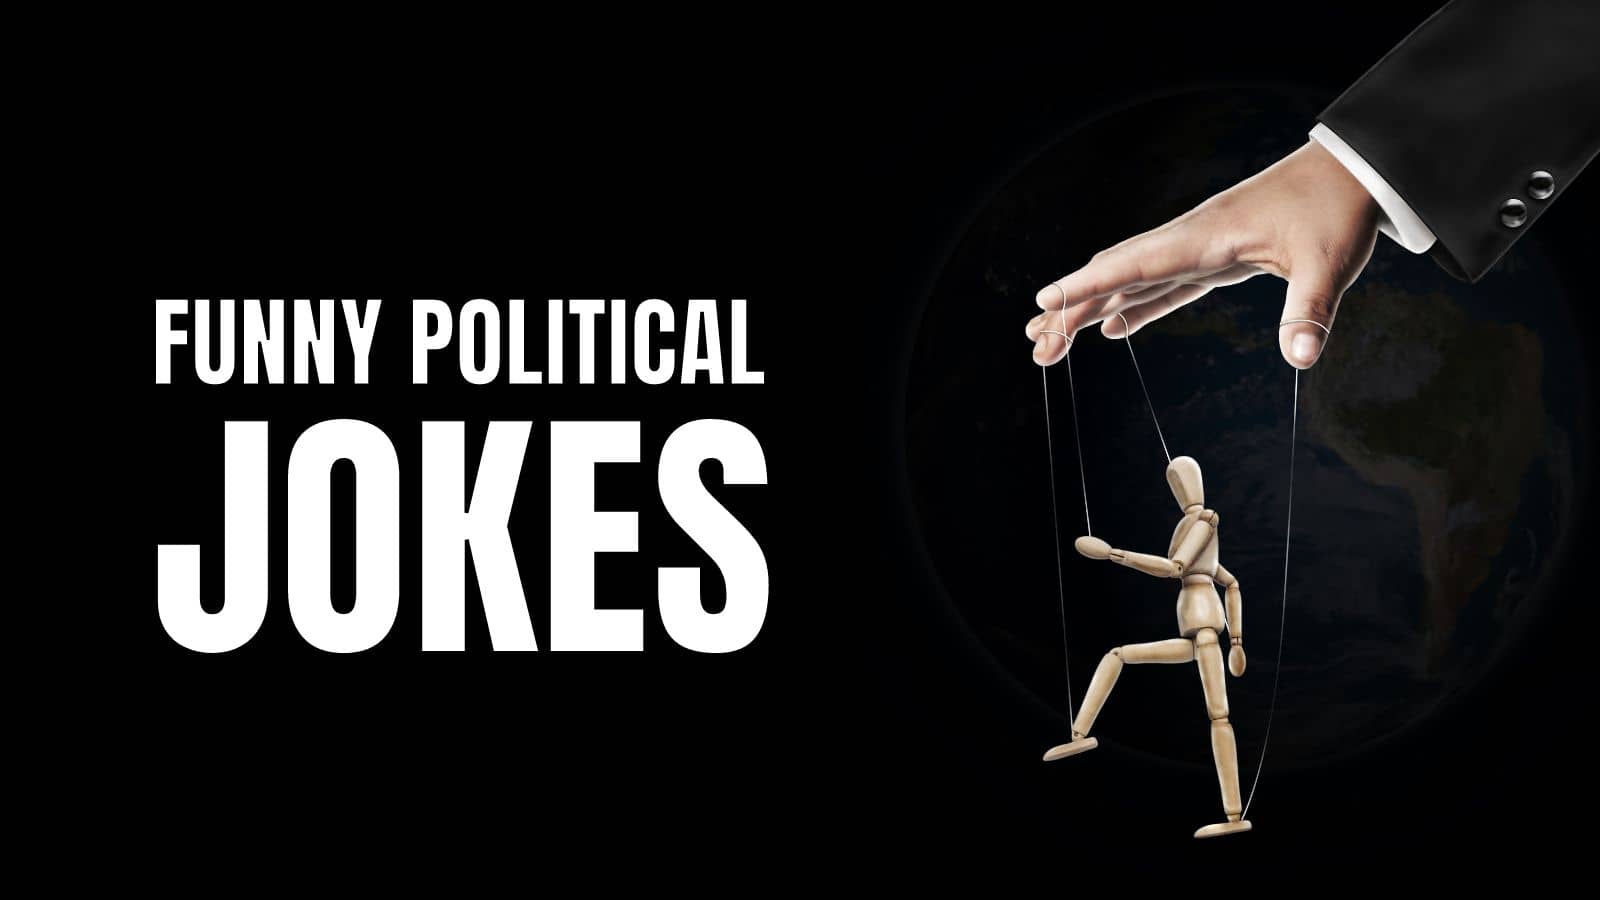 Funny Political Jokes on Politics